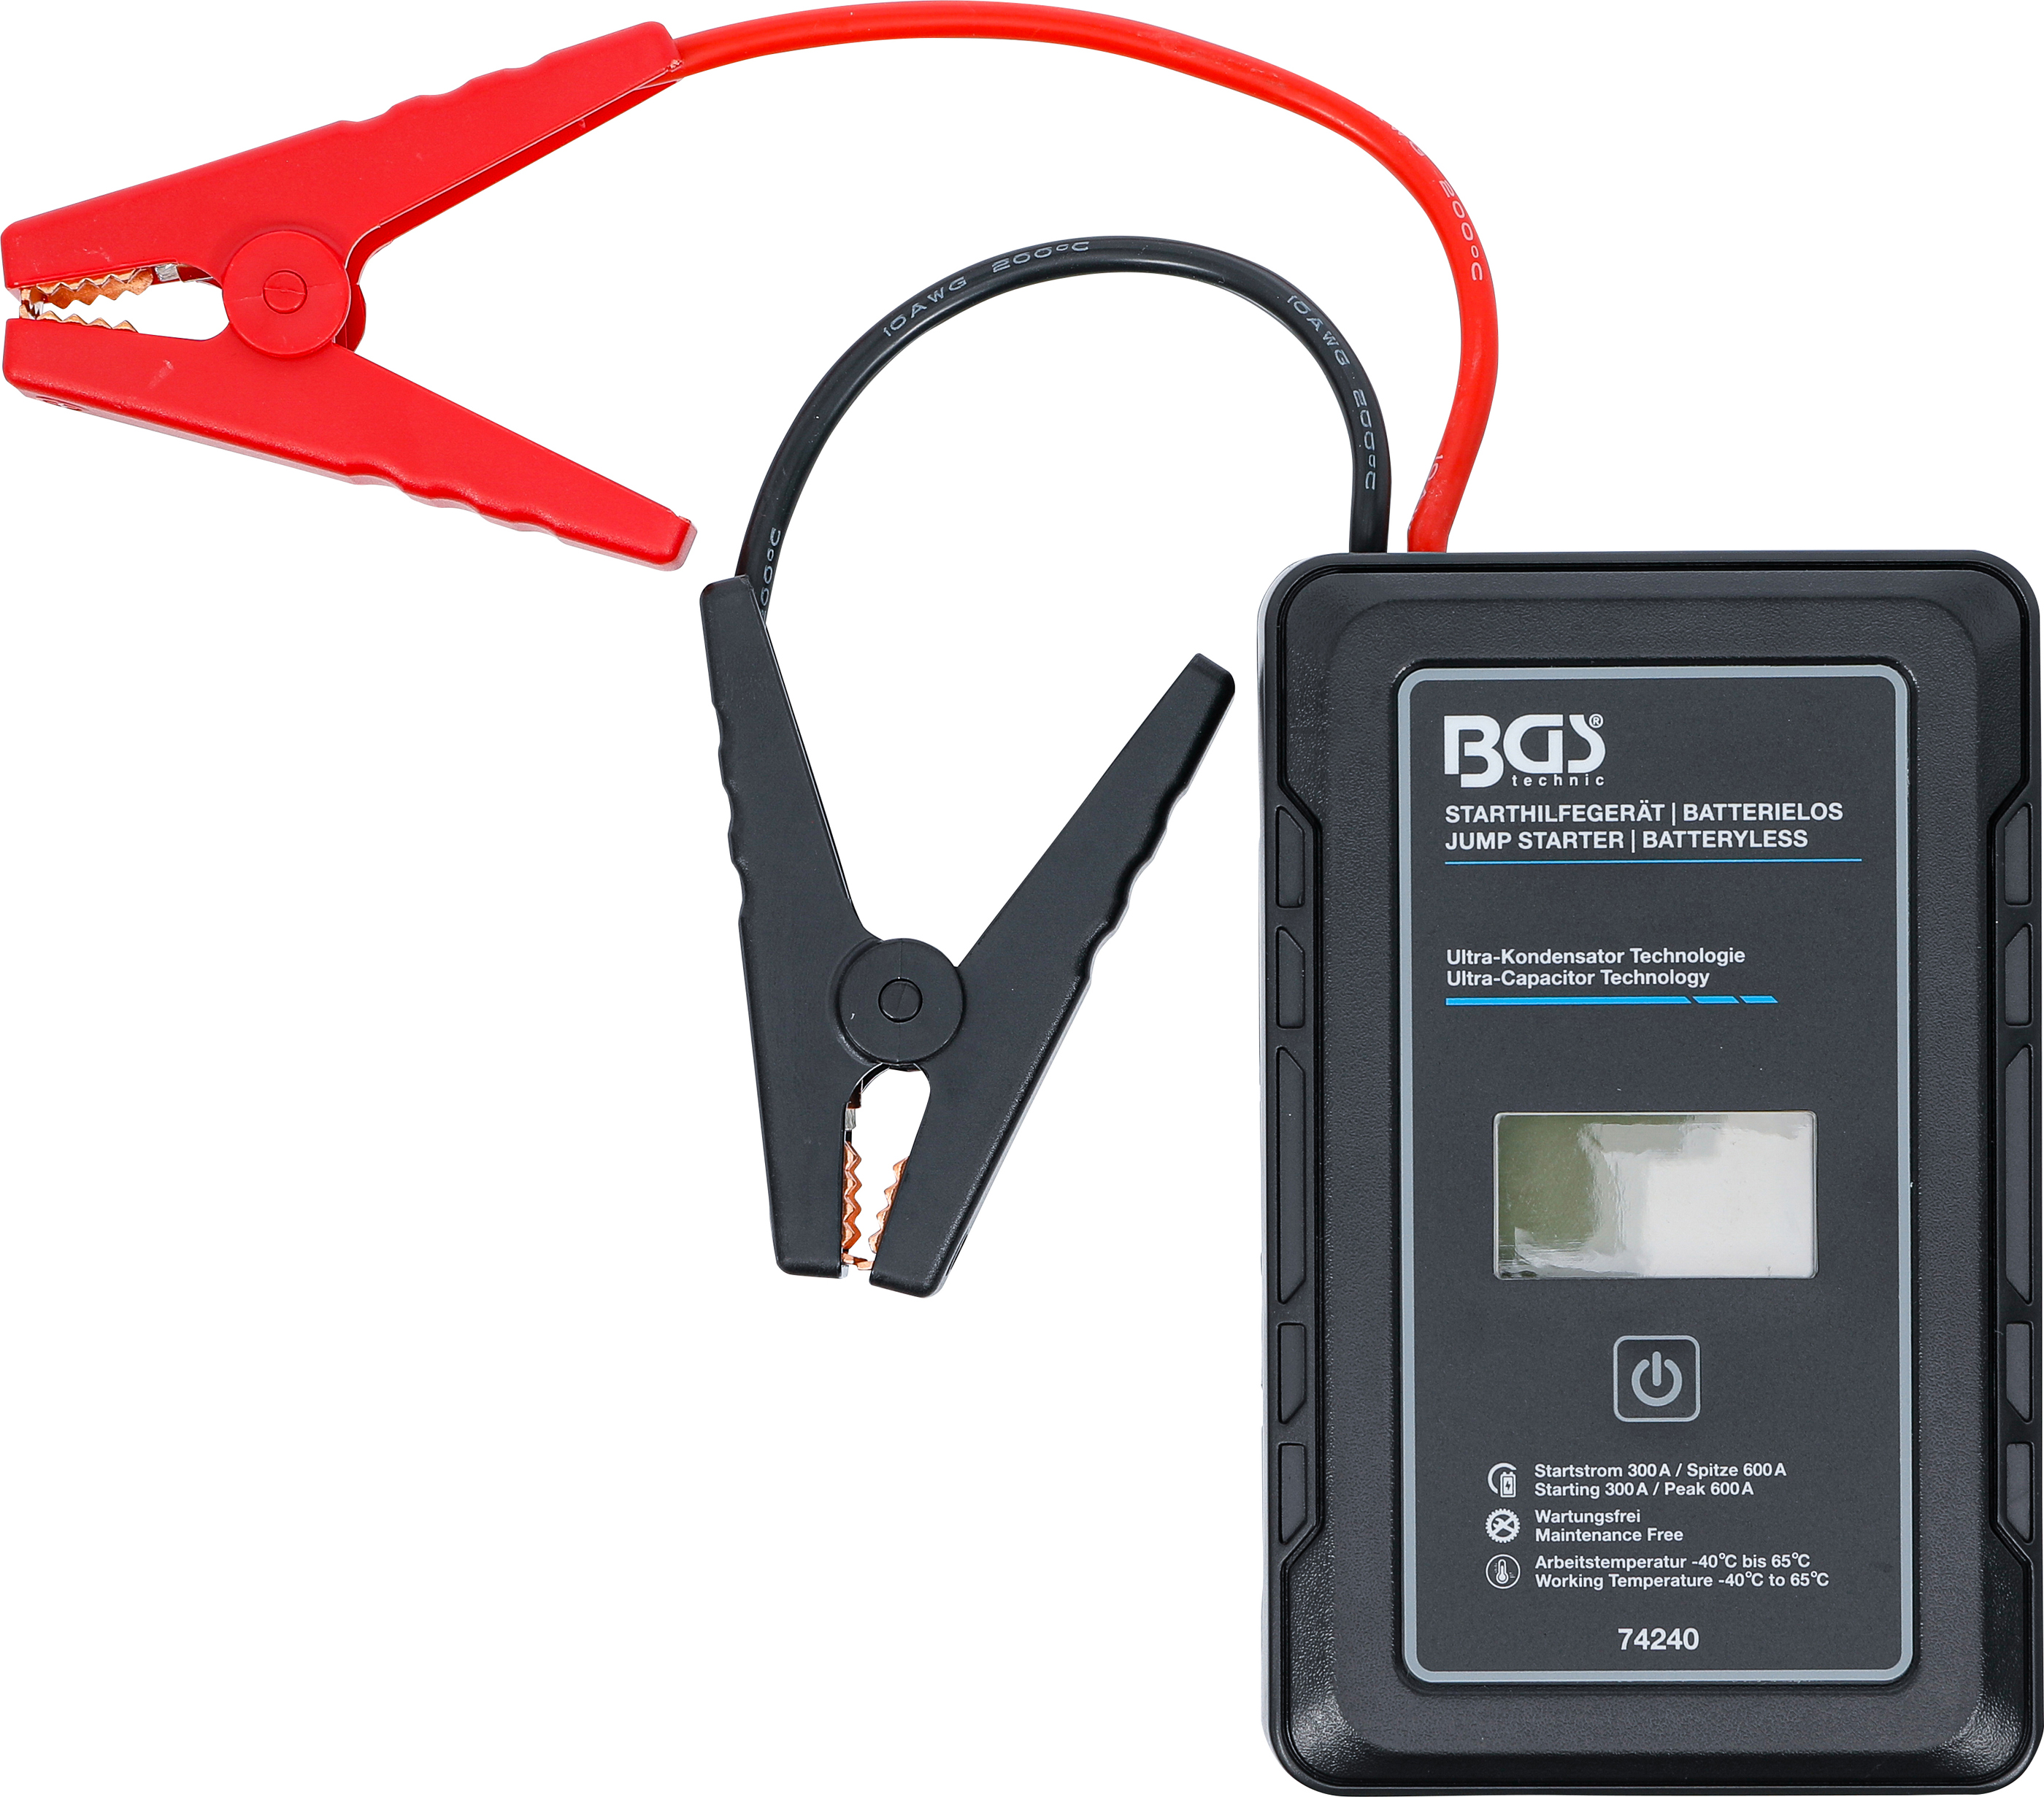 BGS Starthilfegerät | Batterielos | mit Ultra-Kondensator Technologie | 12 V / 300 A / 600 A